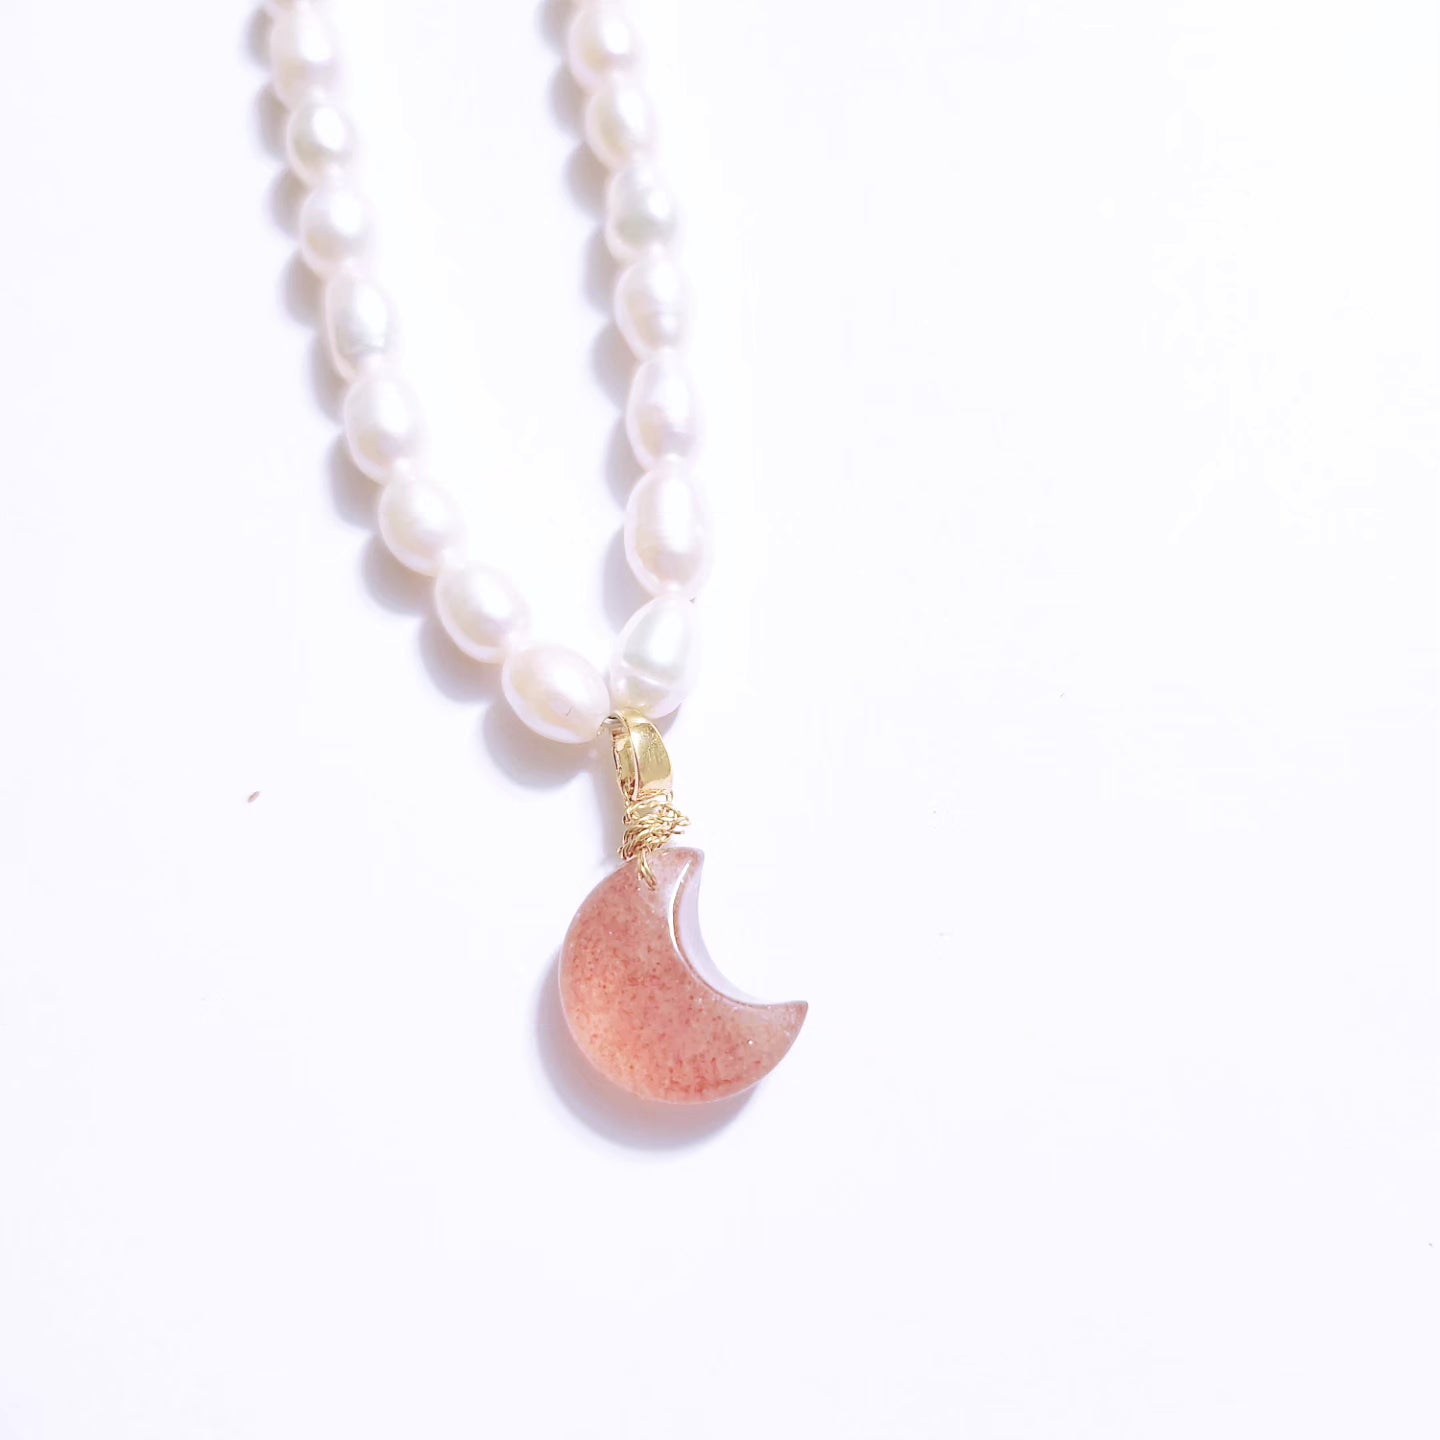 Handmade Crystal Necklace- Strawberry Moon Night